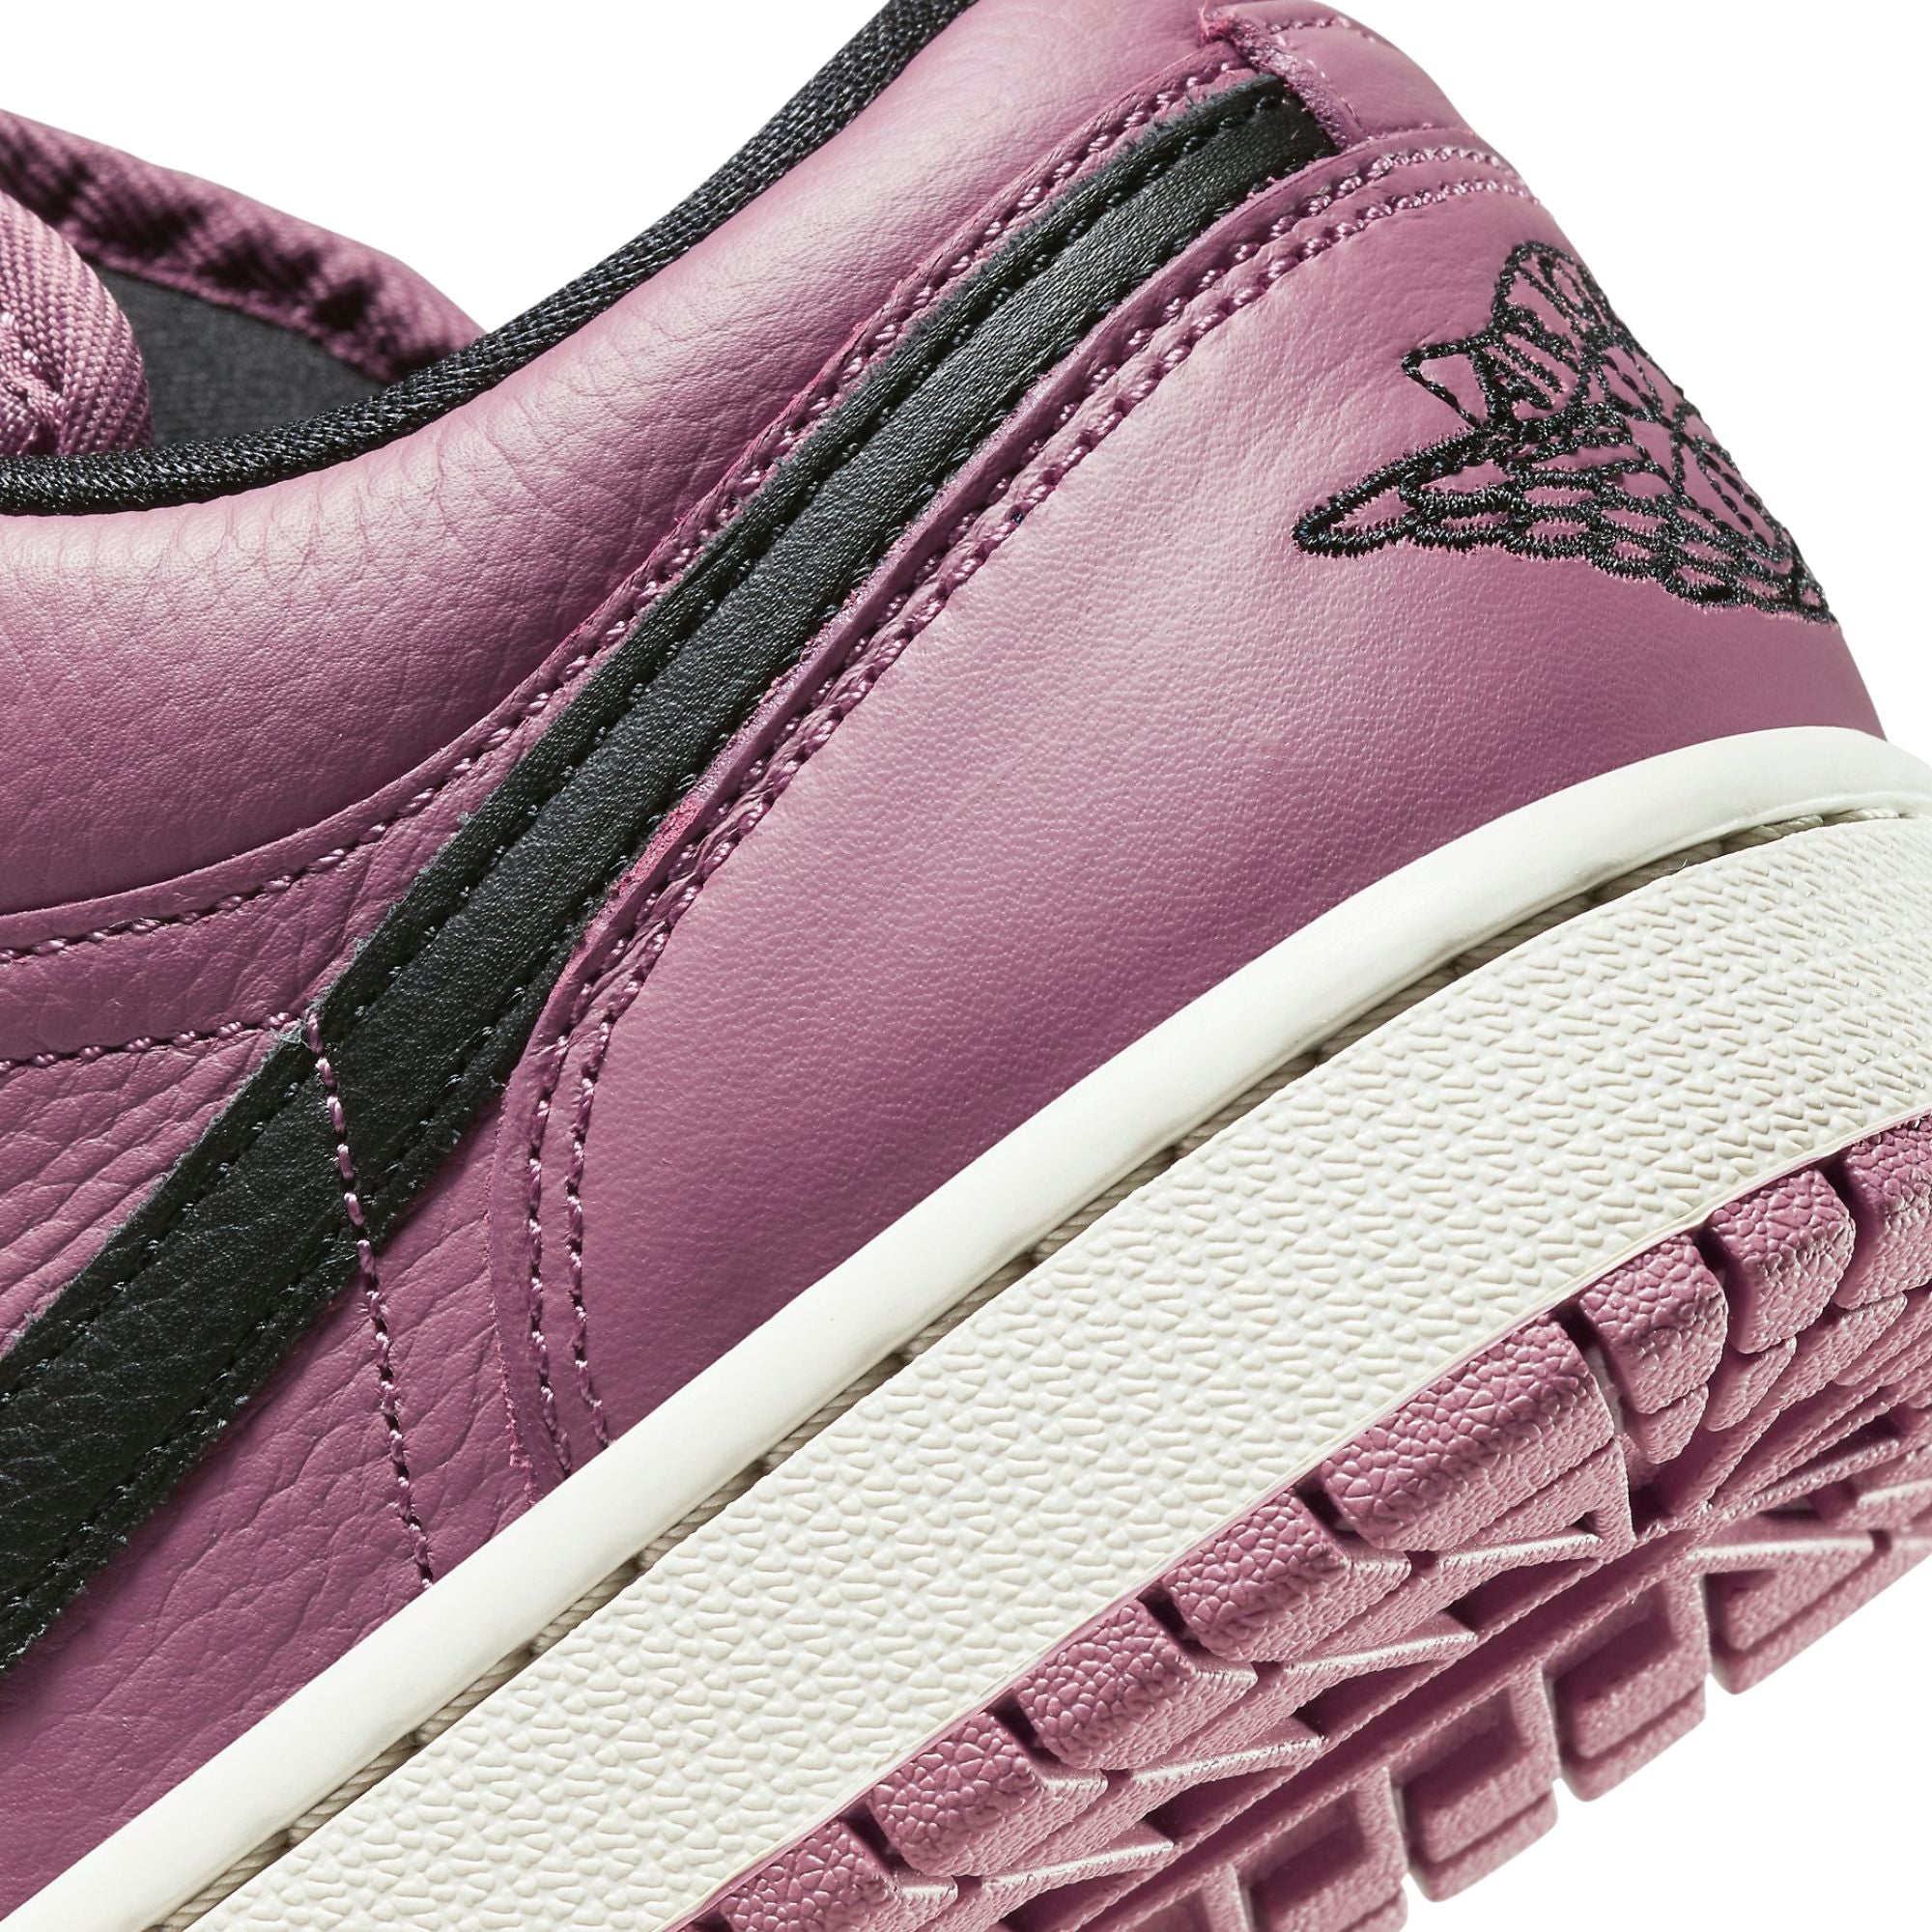 Air Jordan 1 Low ’Mulberry Purple’ Sneakers